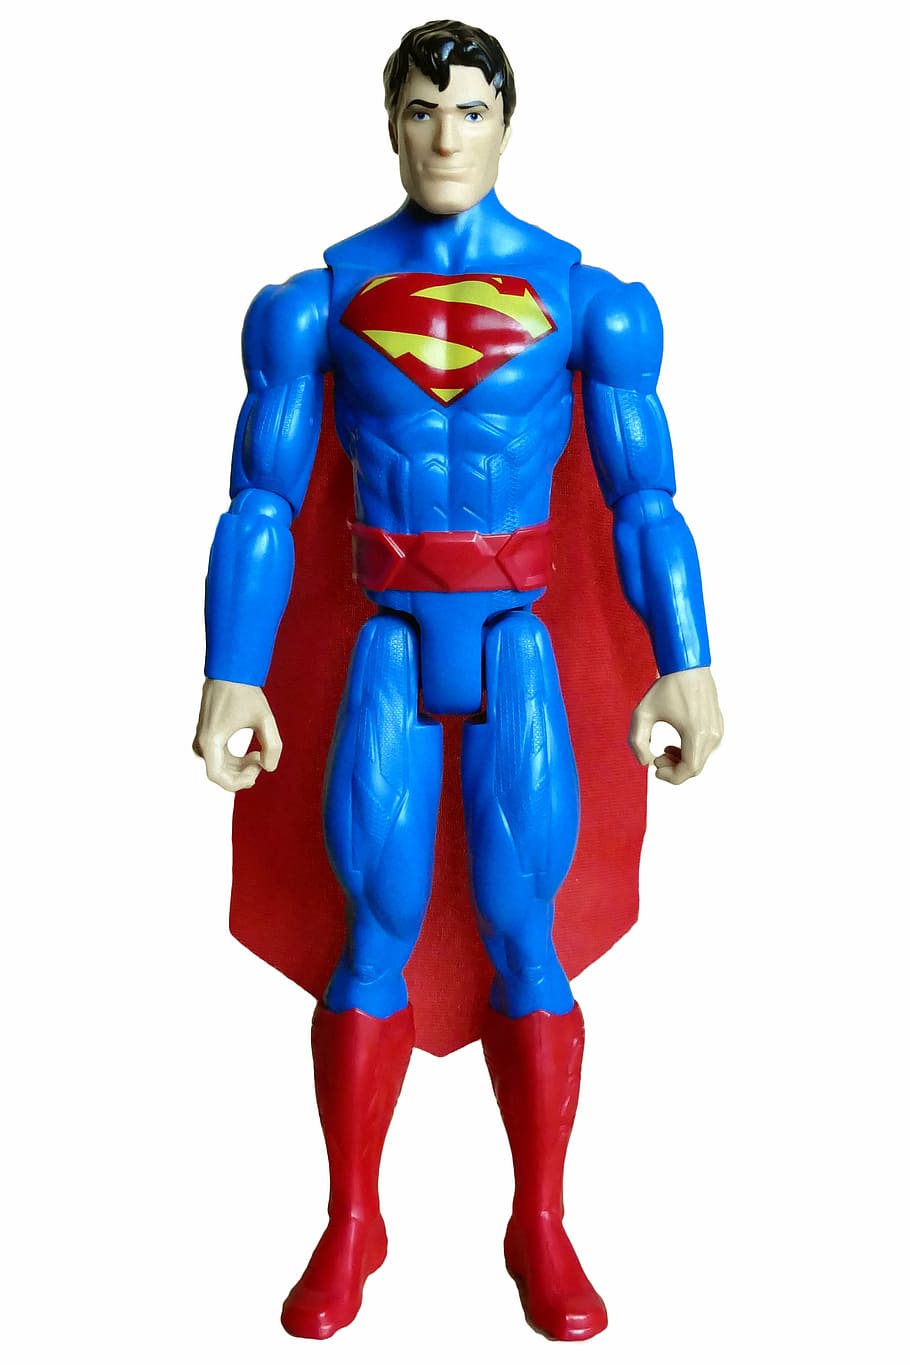 superman action figure, hero, superman, superhero, super, power, strength, super hero, man, costume